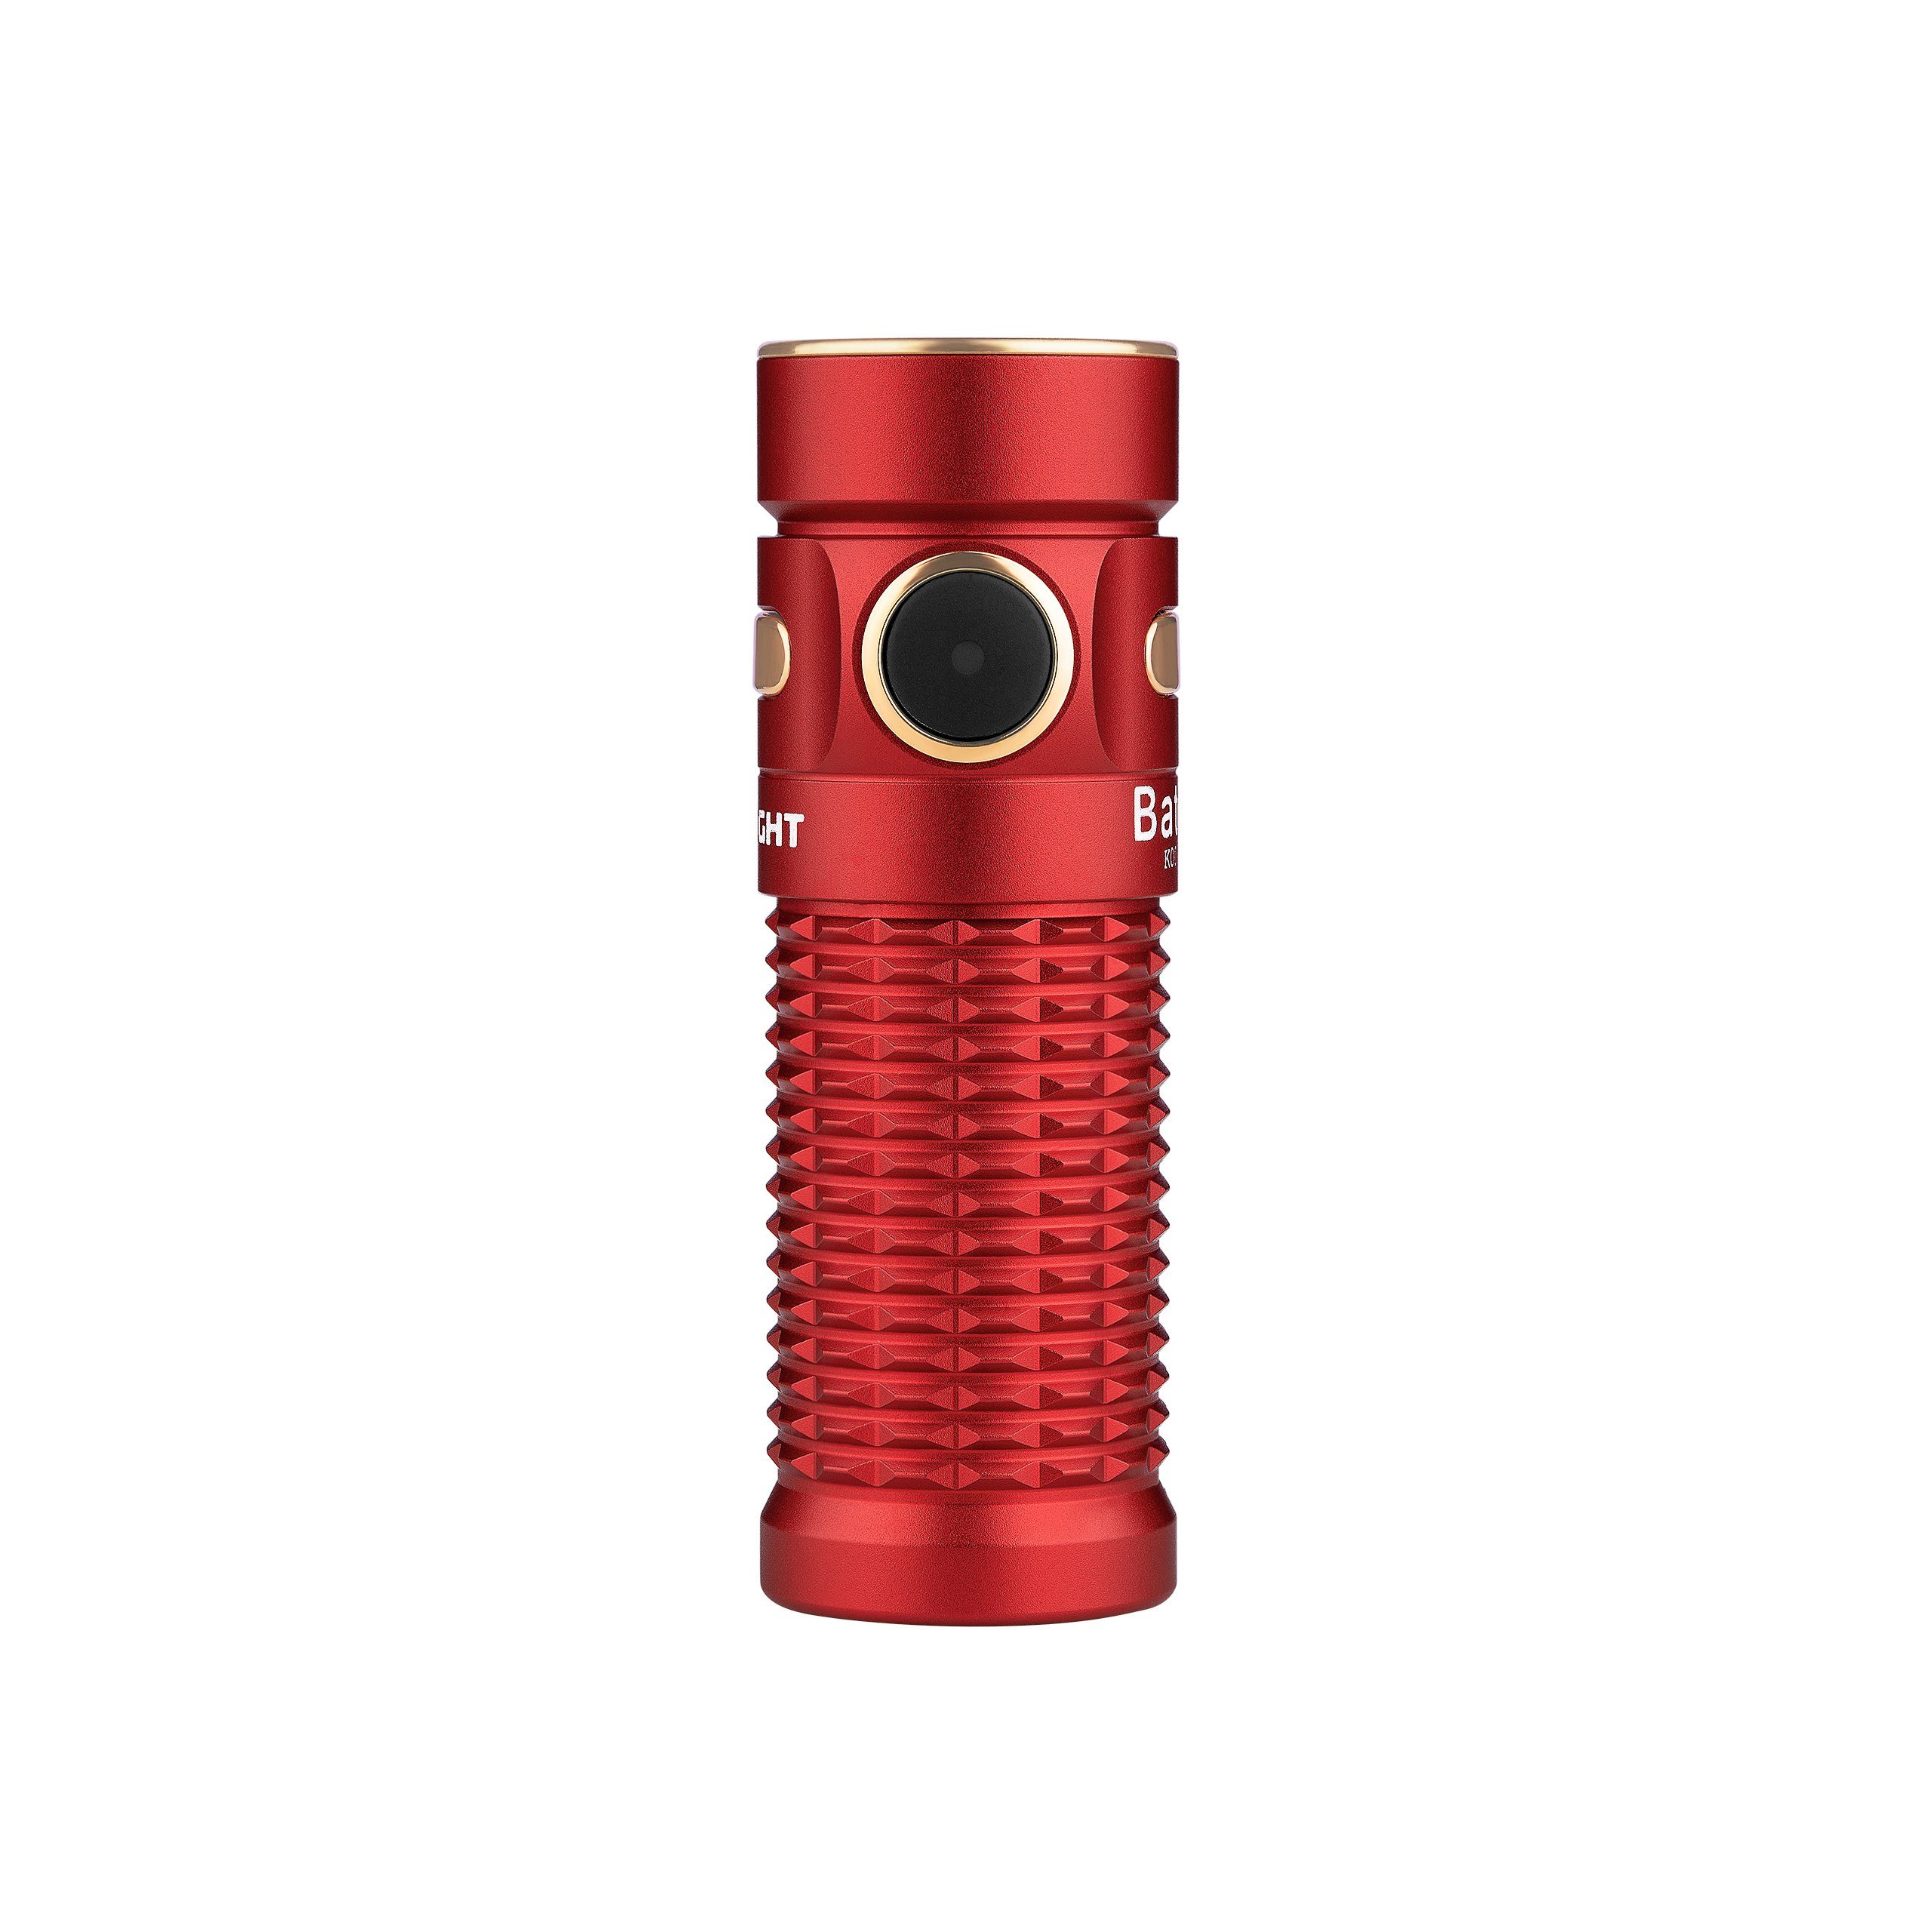 OLIGHT LED Taschenlampe rot 3 Edition Ladecase Premium inkl. Baton 